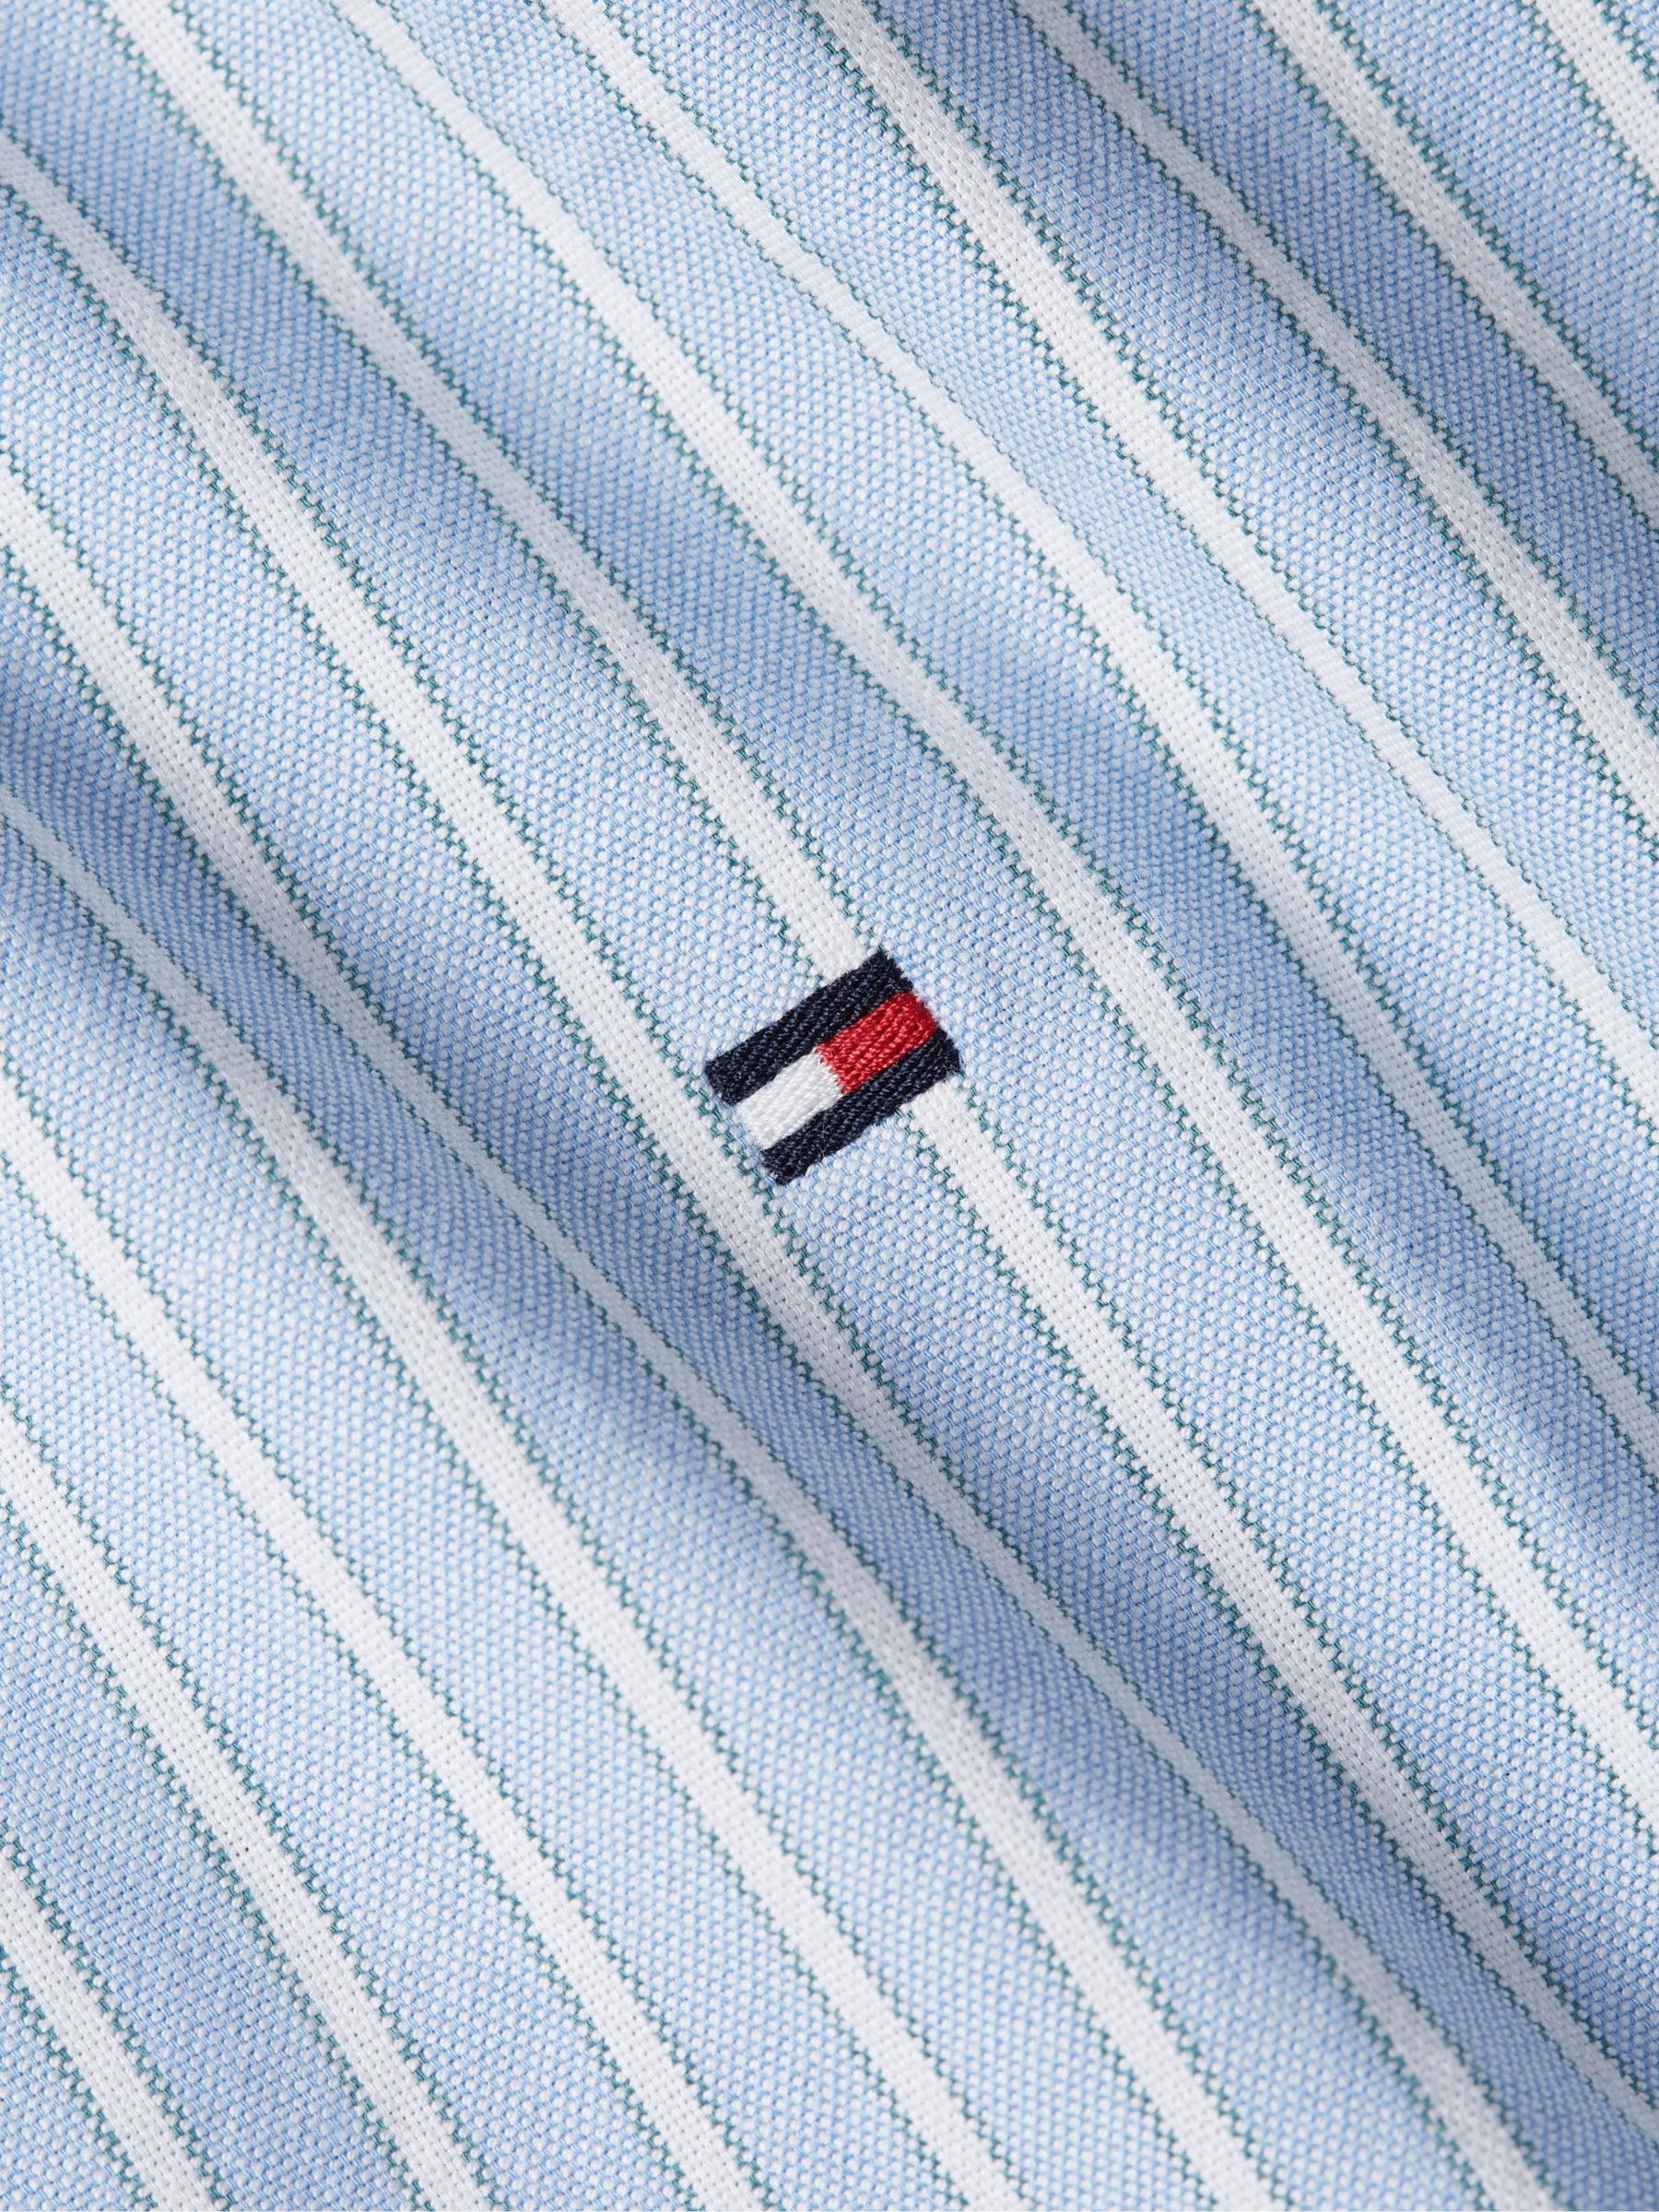 Buy Tommy Hilfiger Oxford Candy Stripe Shirt, Vessel Blue/White Online at johnlewis.com